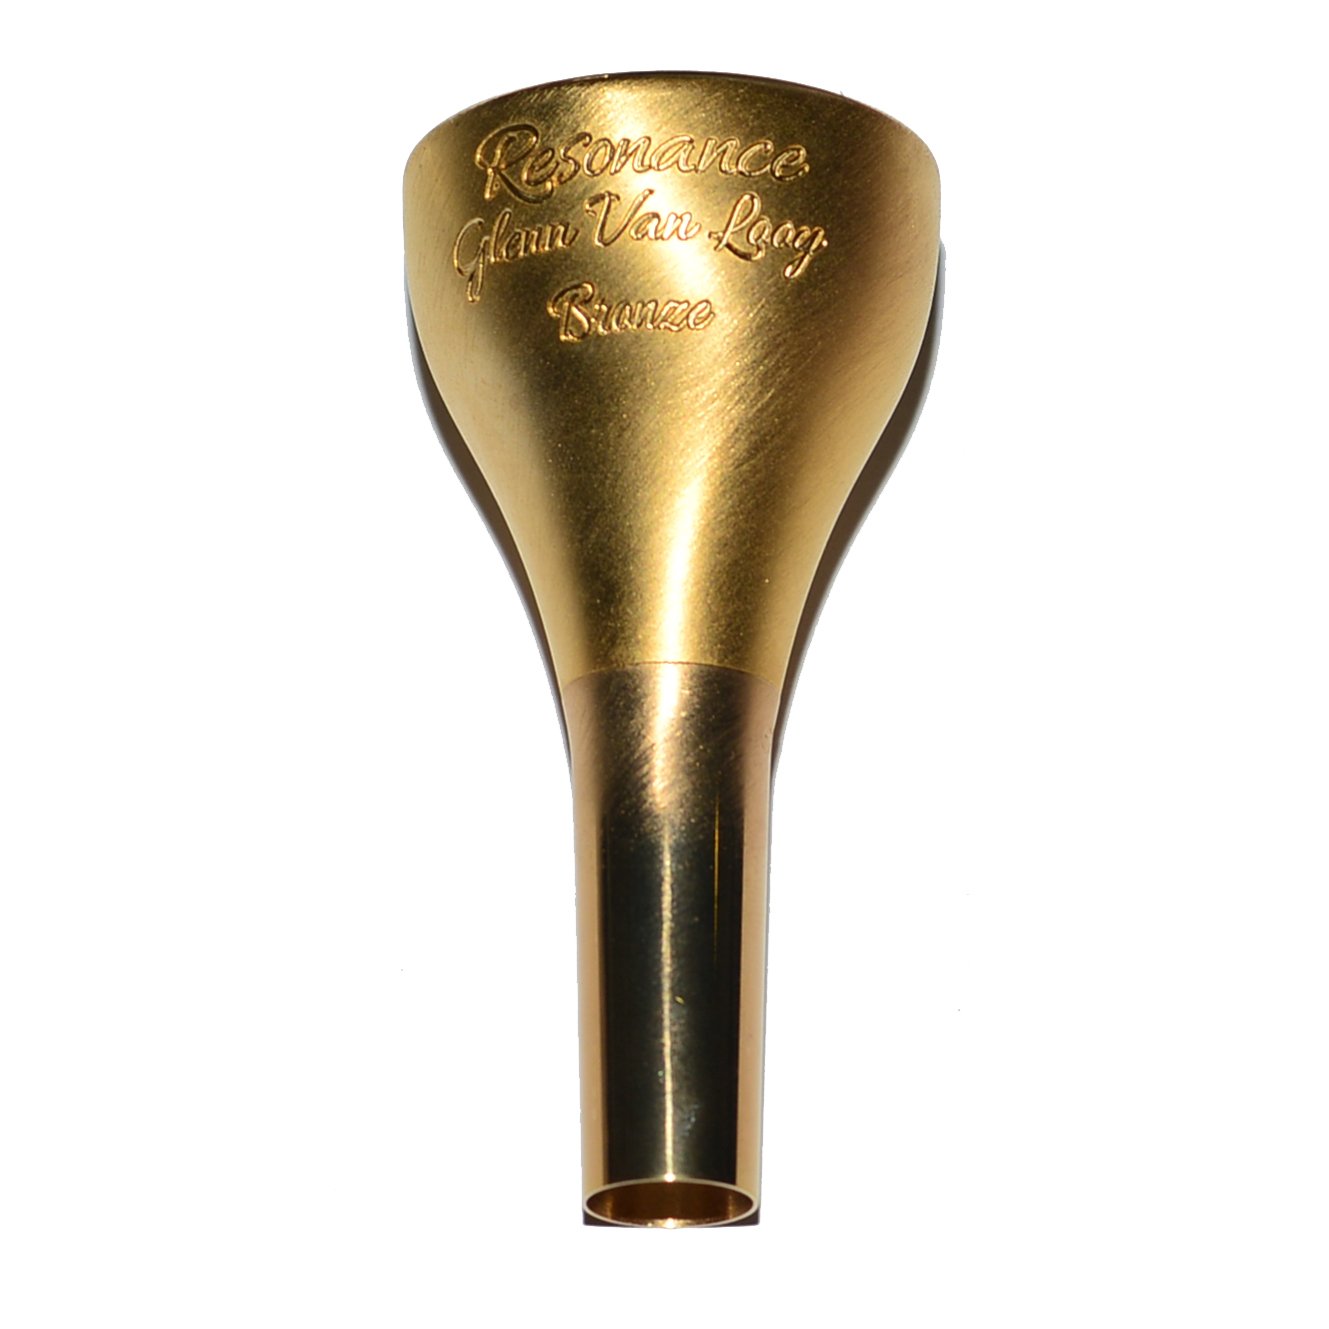 AR Resonance - Glenn Van Looy Signature Euphonium Mouthpiece (Bronze Gold)